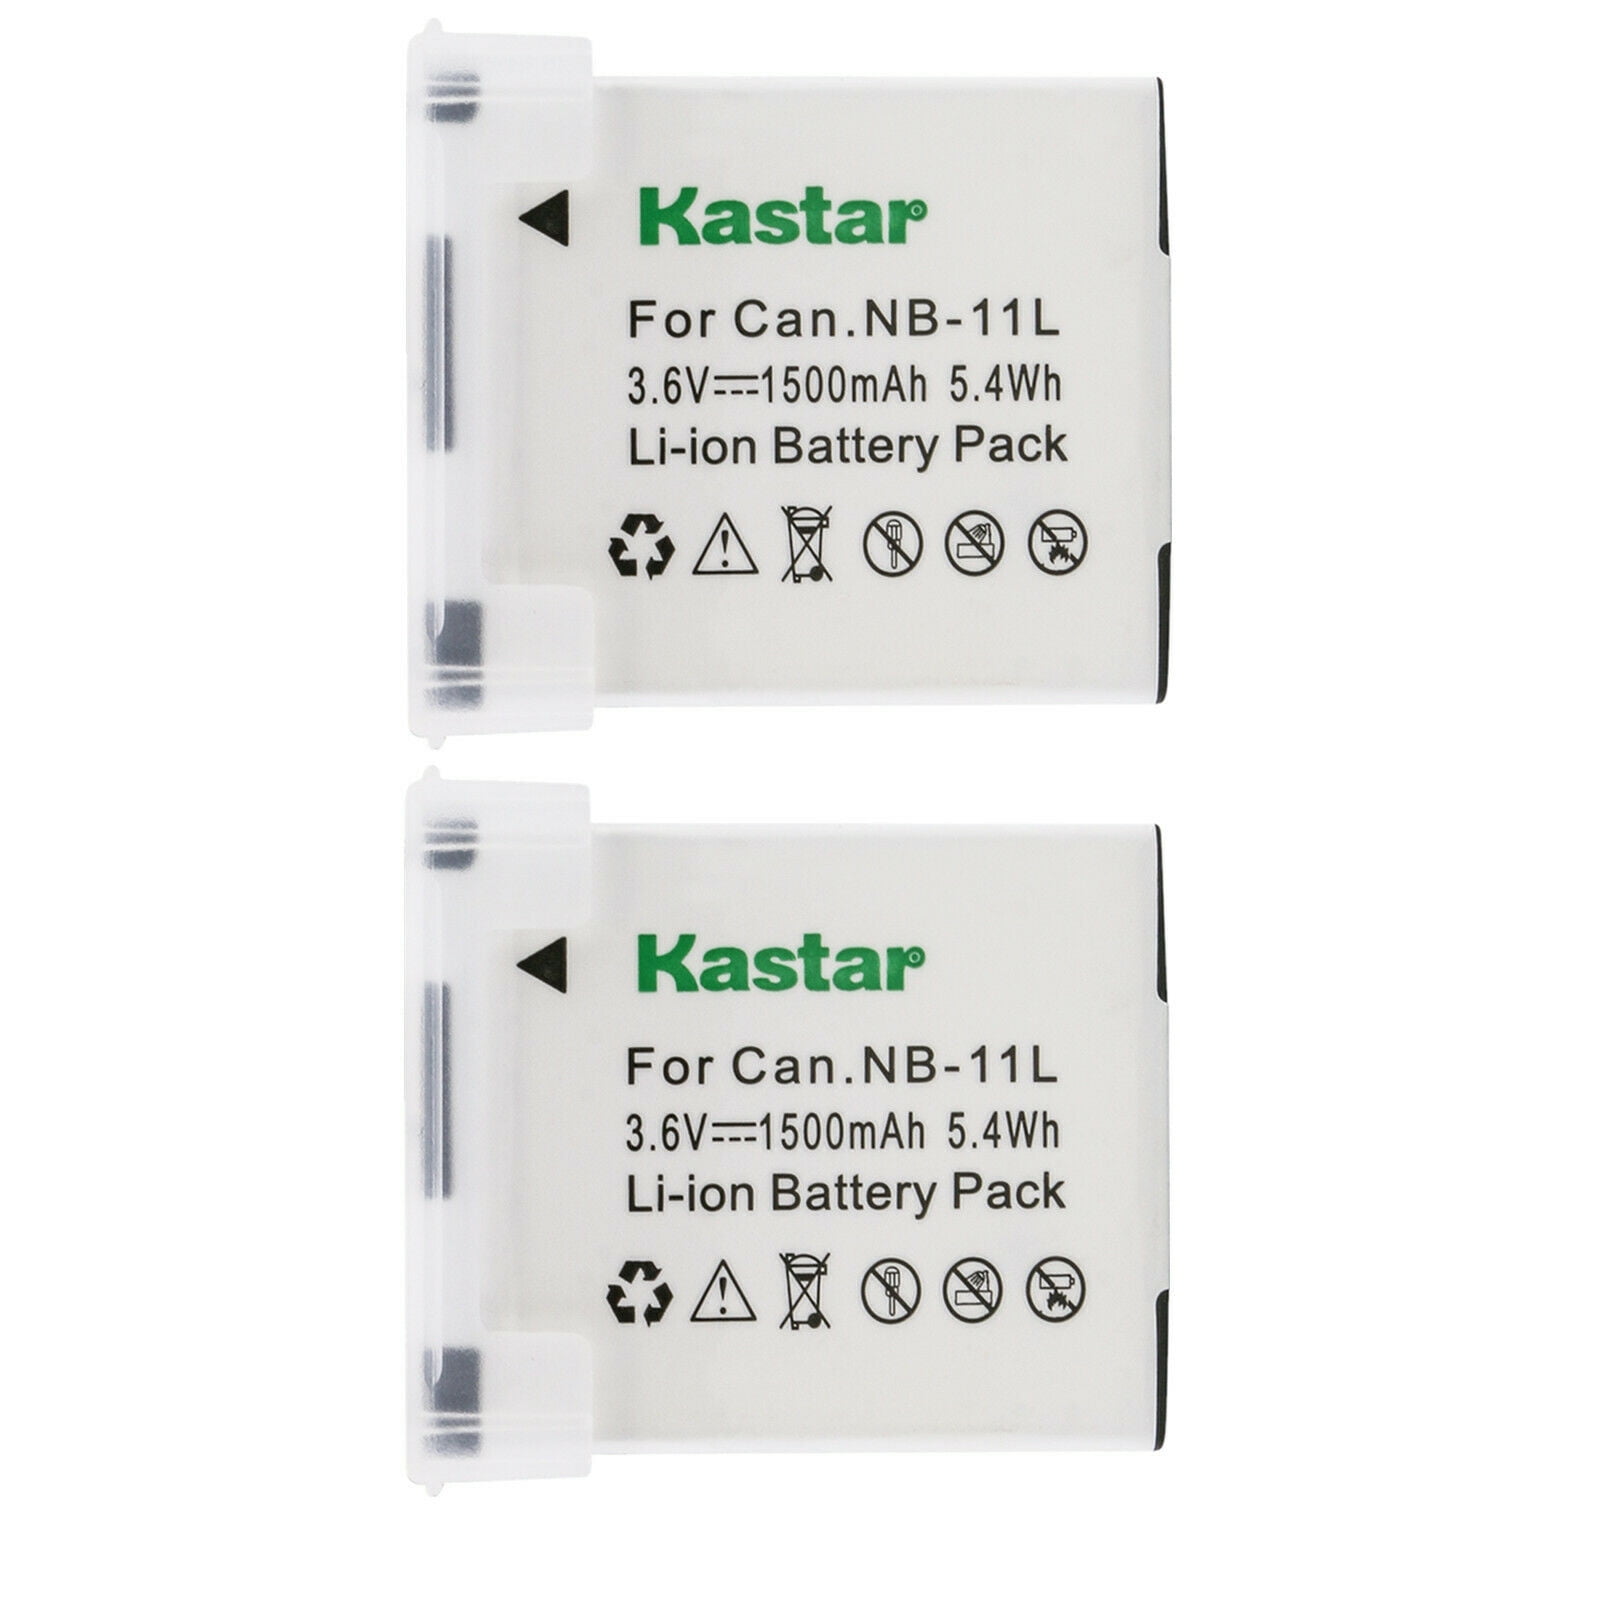 Kastar 4-Pack Battery and Ltd2 USB Charger Replacement for Kodak LB-060 LB060 Battery, Kodak Pixpro Az251, Pixpro AZ361 AZ362 Az365, Pixpro Az421